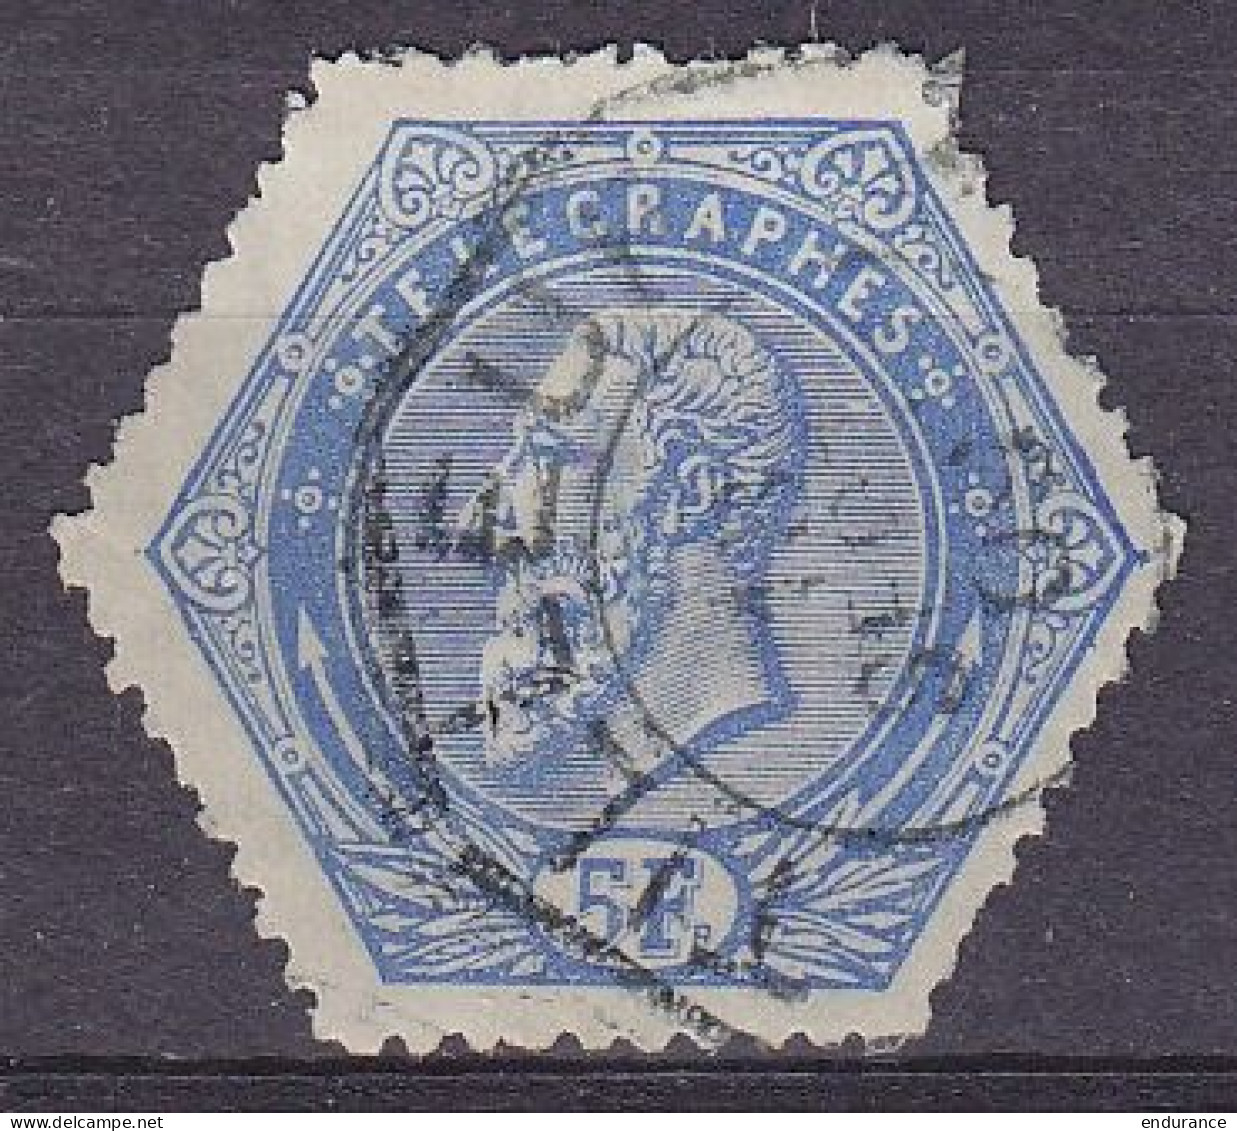 Belgique - Télégraphe TG17 (1899) 5f Bleu - Superbe Oblit. TILLEUR /18 SEPT 190? - Telegraphenmarken [TG]